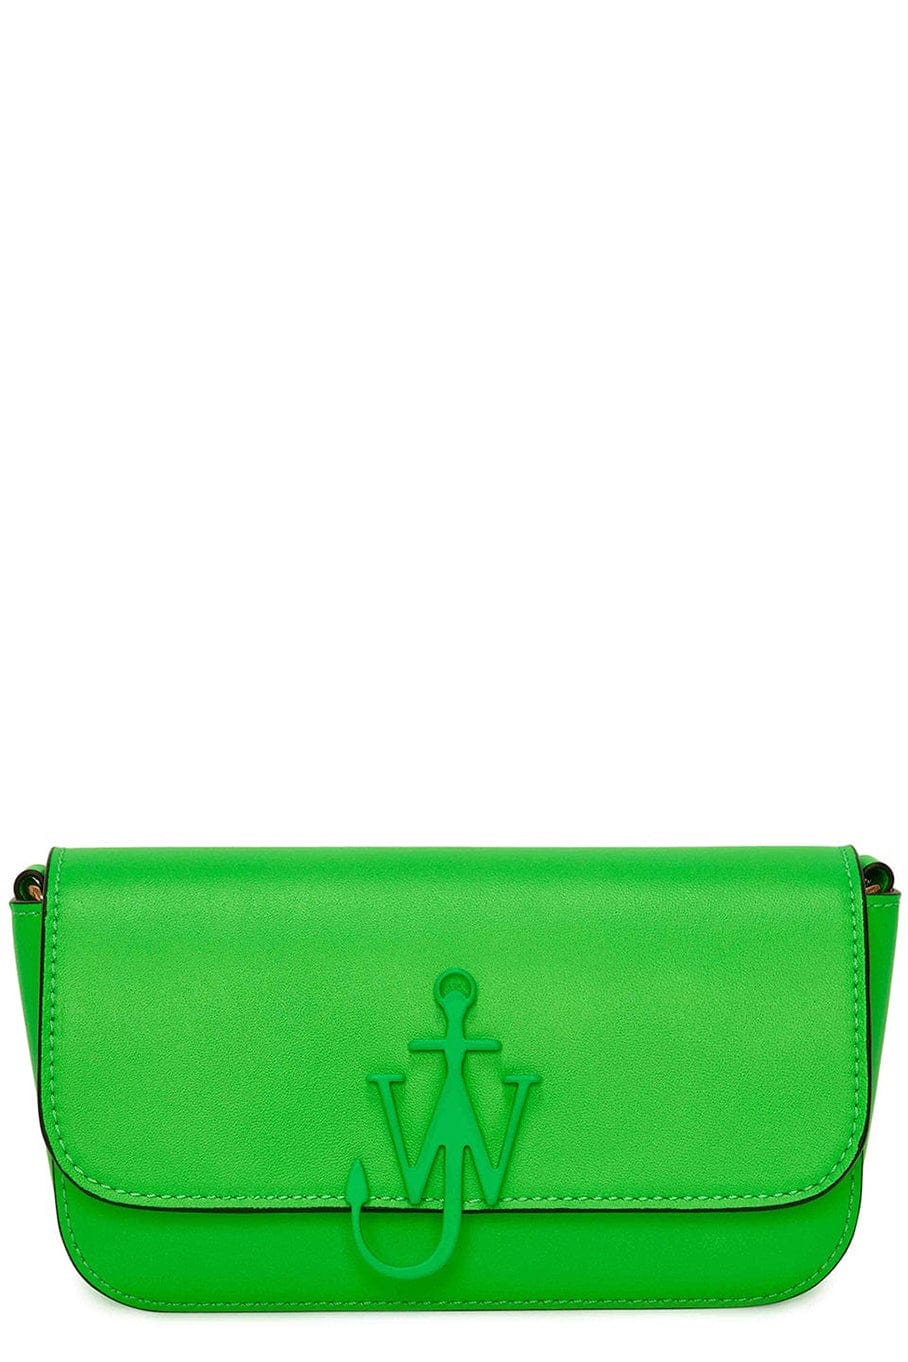 JW ANDERSON-Chain Baguette Anchor Bag - Neon Green-NEON GREEN